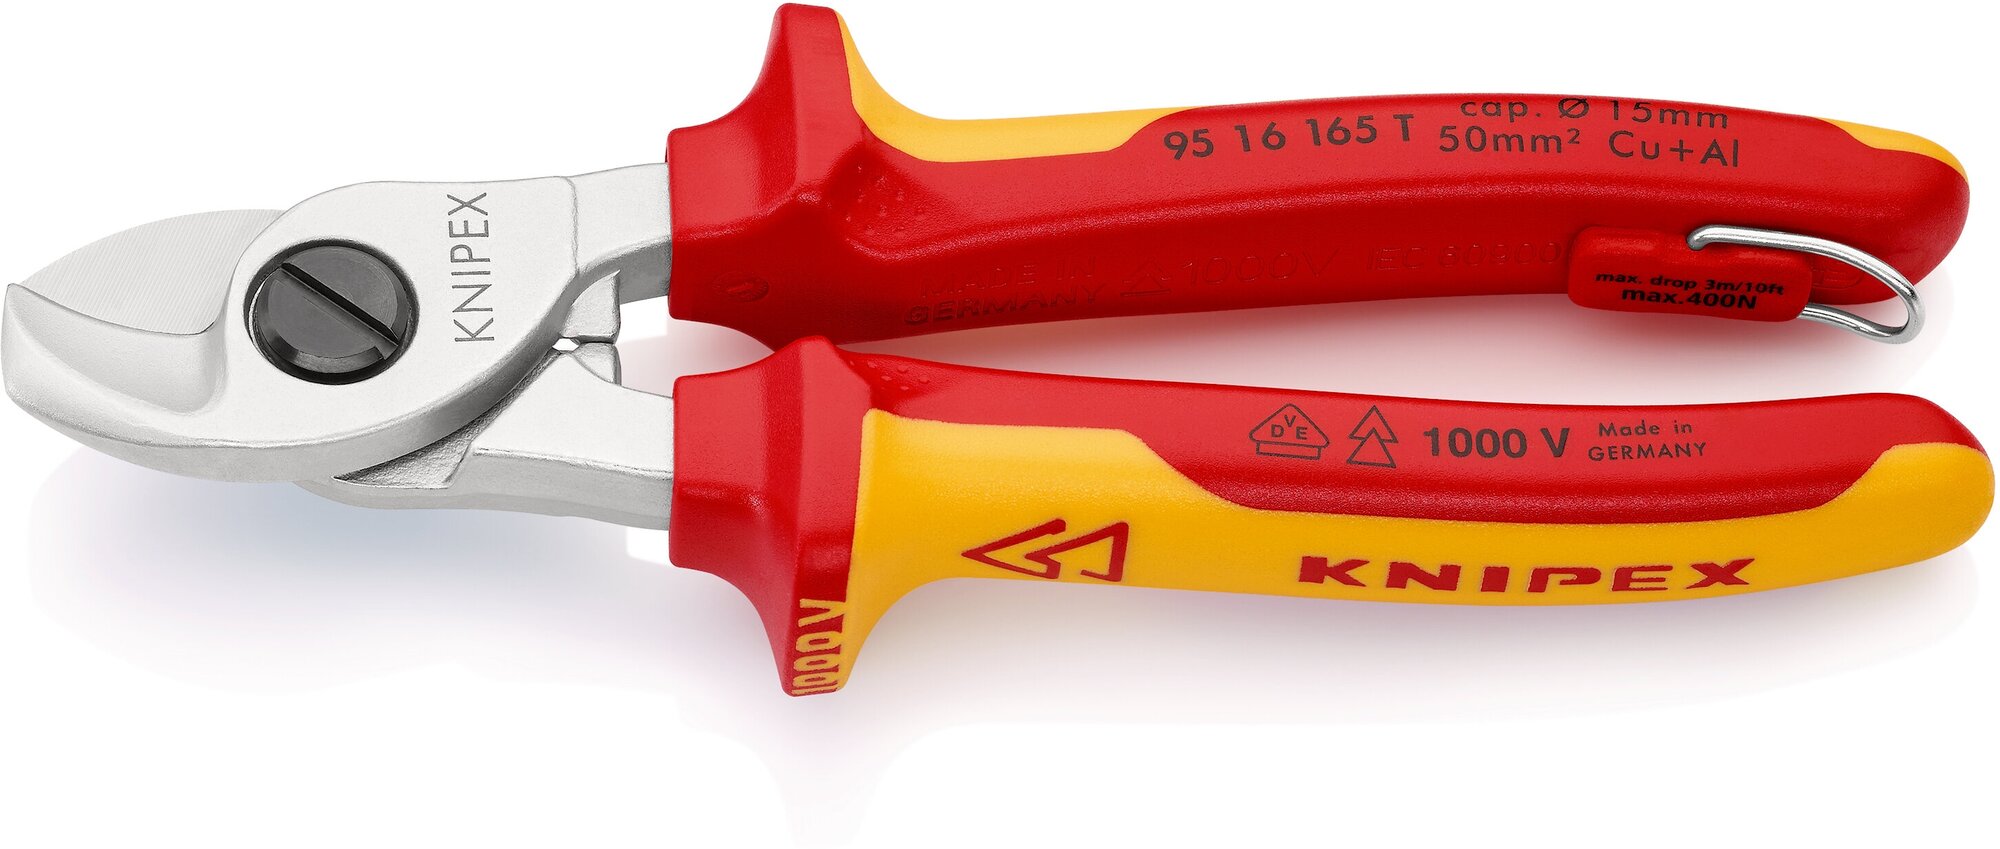 Кабелерез KNIPEX VDE, d 15 мм (50 кв. мм.), длина 165 мм, хром, 2-комп диэлектрические ручки, проушина для страховки KN-9516165T